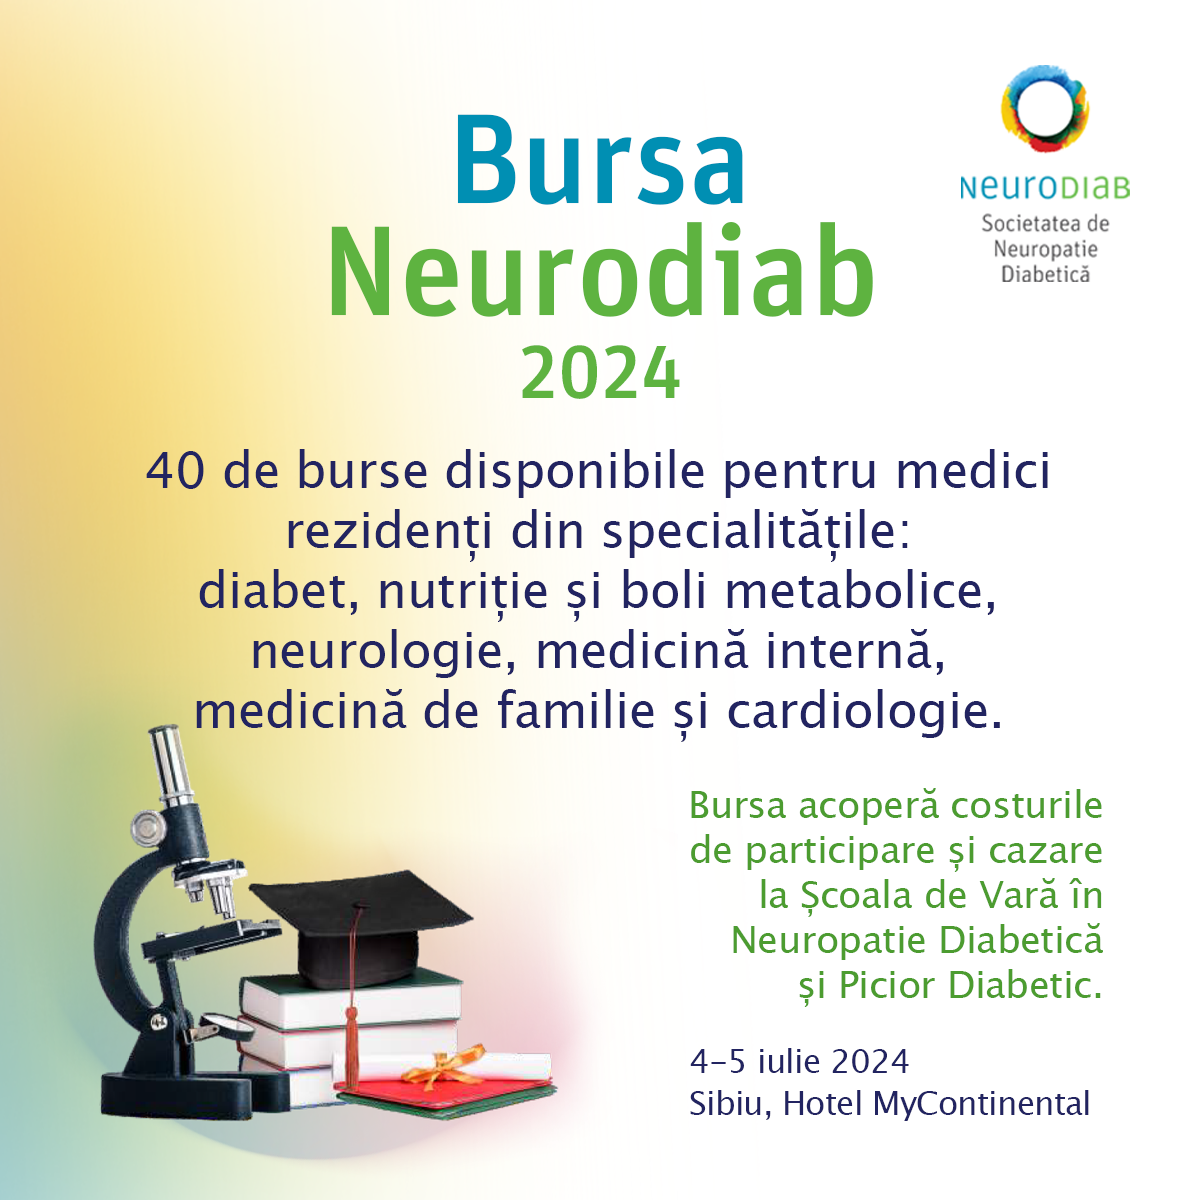 Bursa Neurodiab 2024